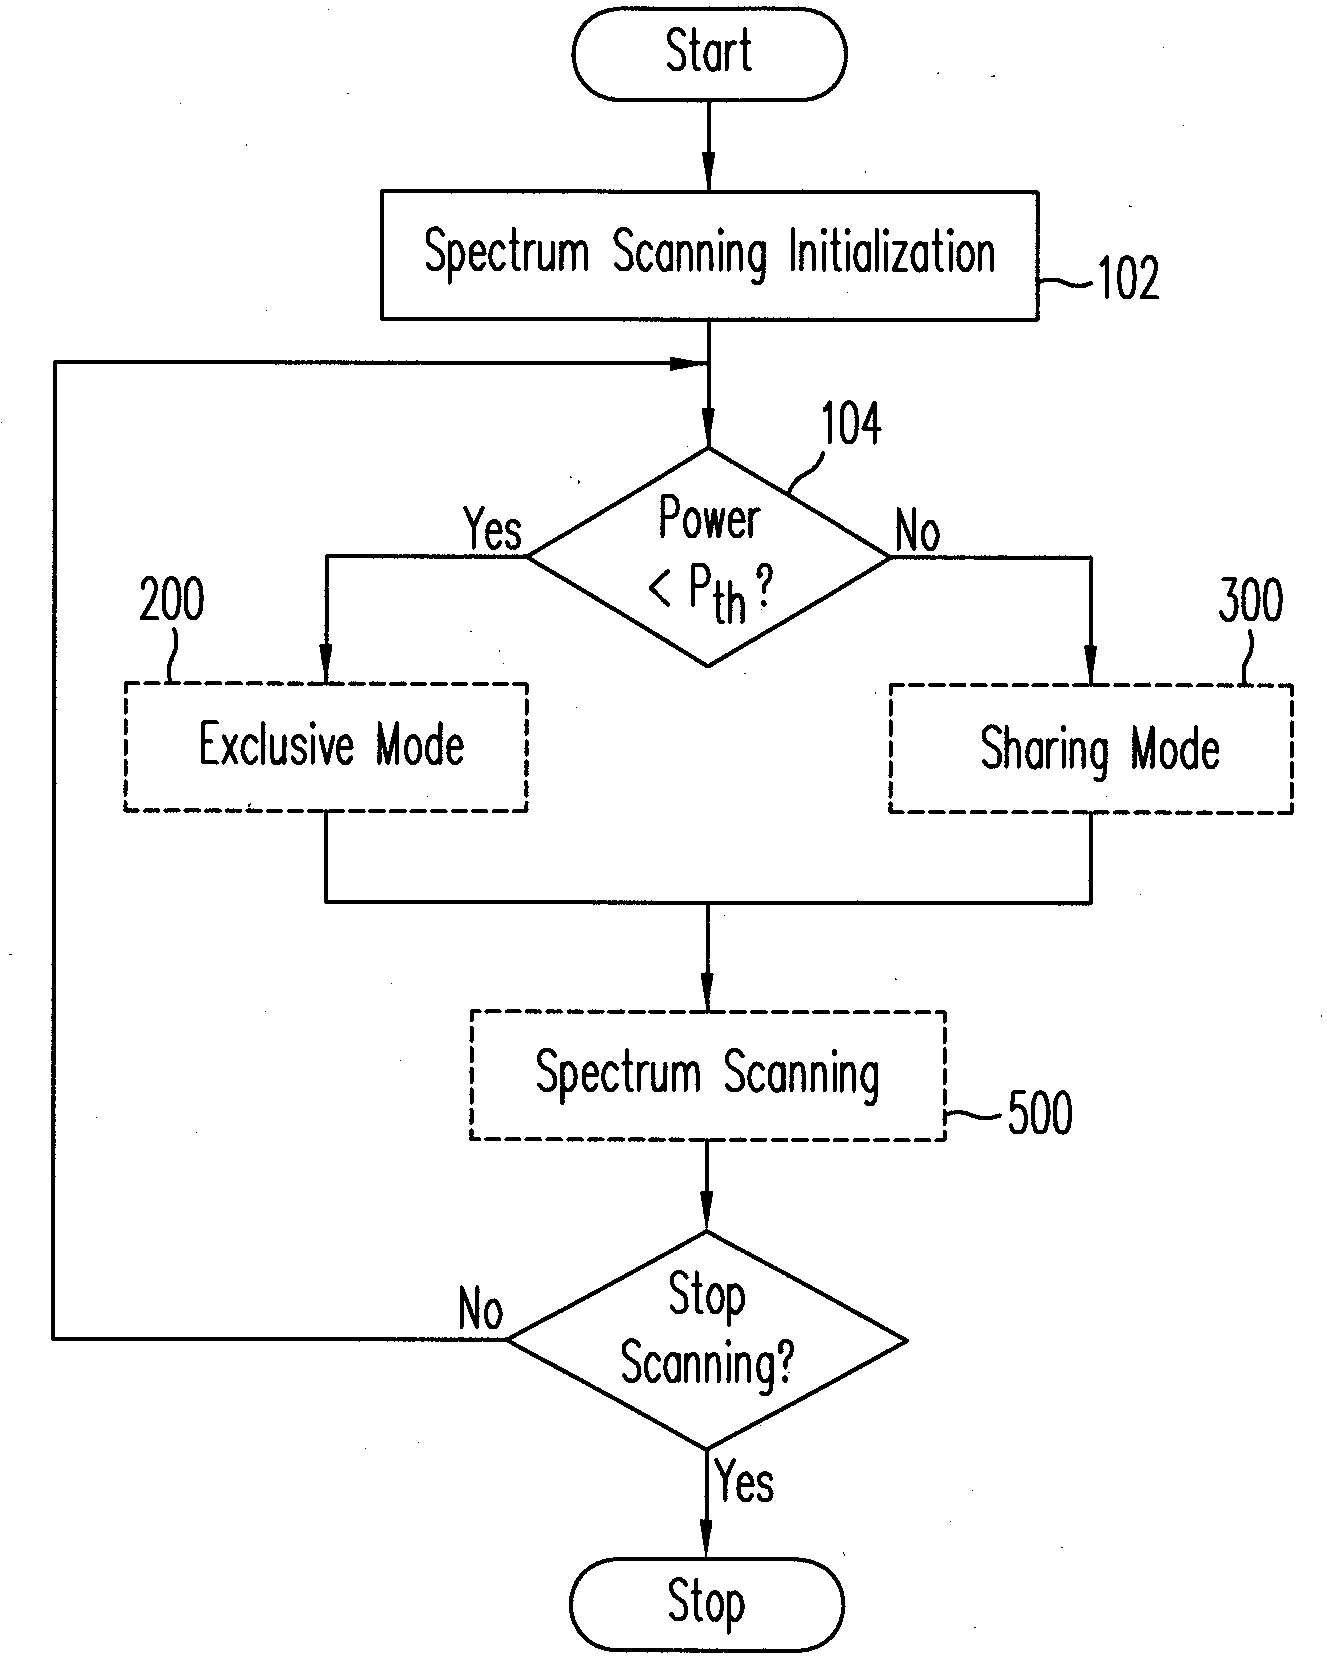 Detect-and-multiplex technique for spectrum sharing